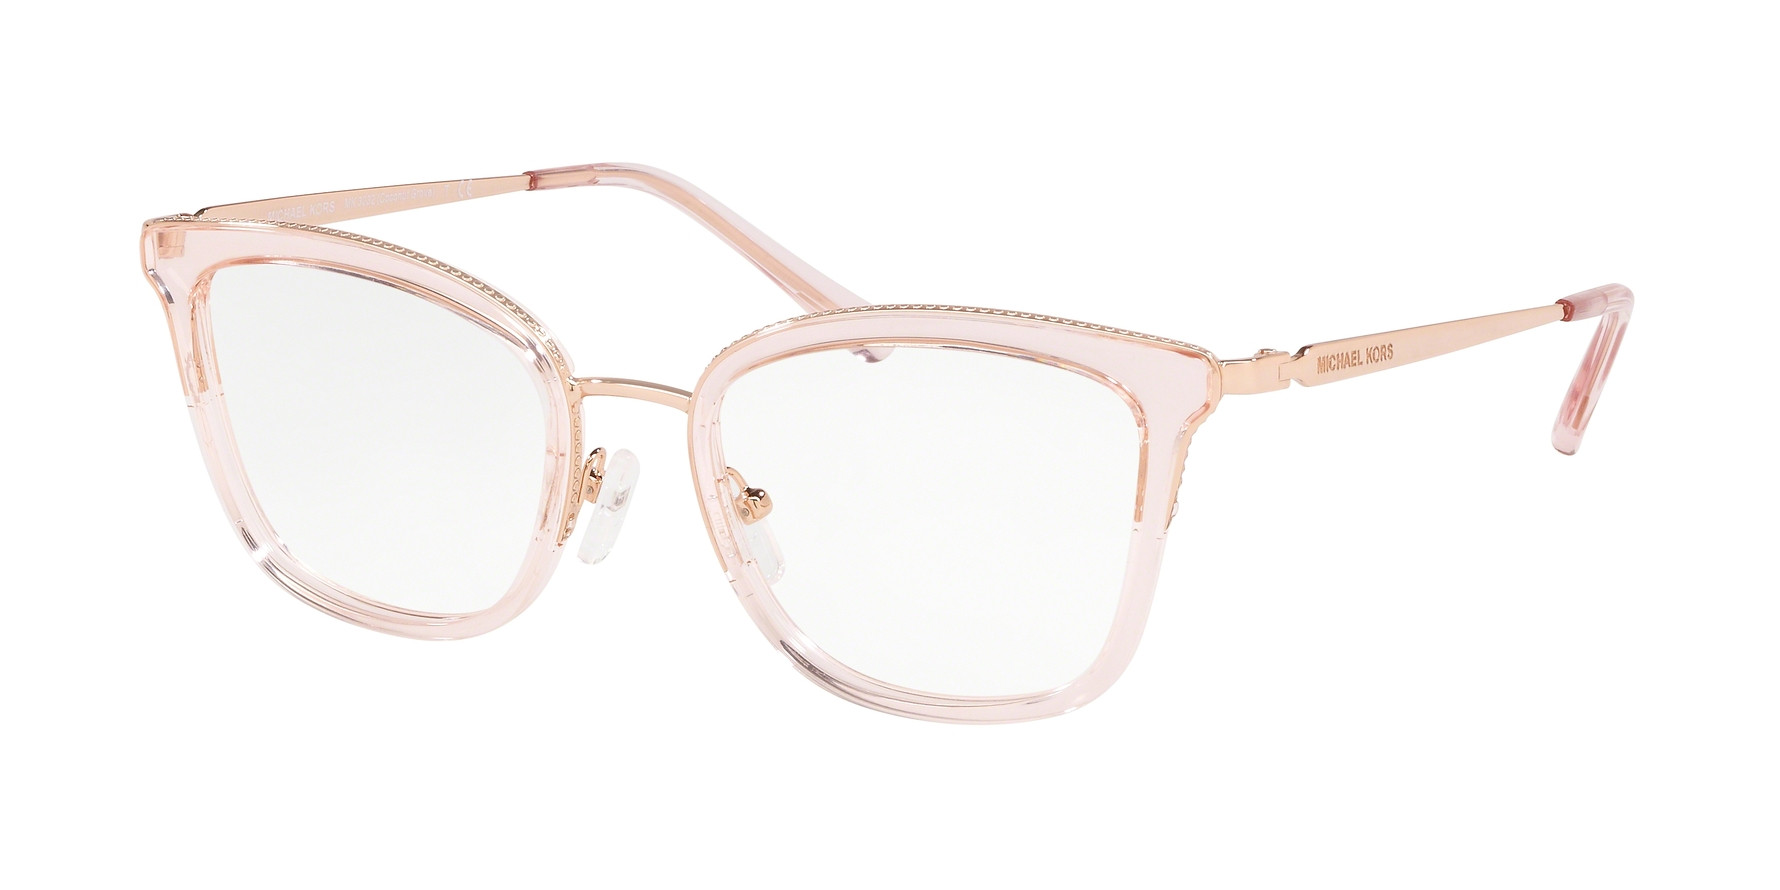 Michael Kors Eyeglasses Coconut-Grove MK3032 3417 Rose Gold/Pink  Transparent 